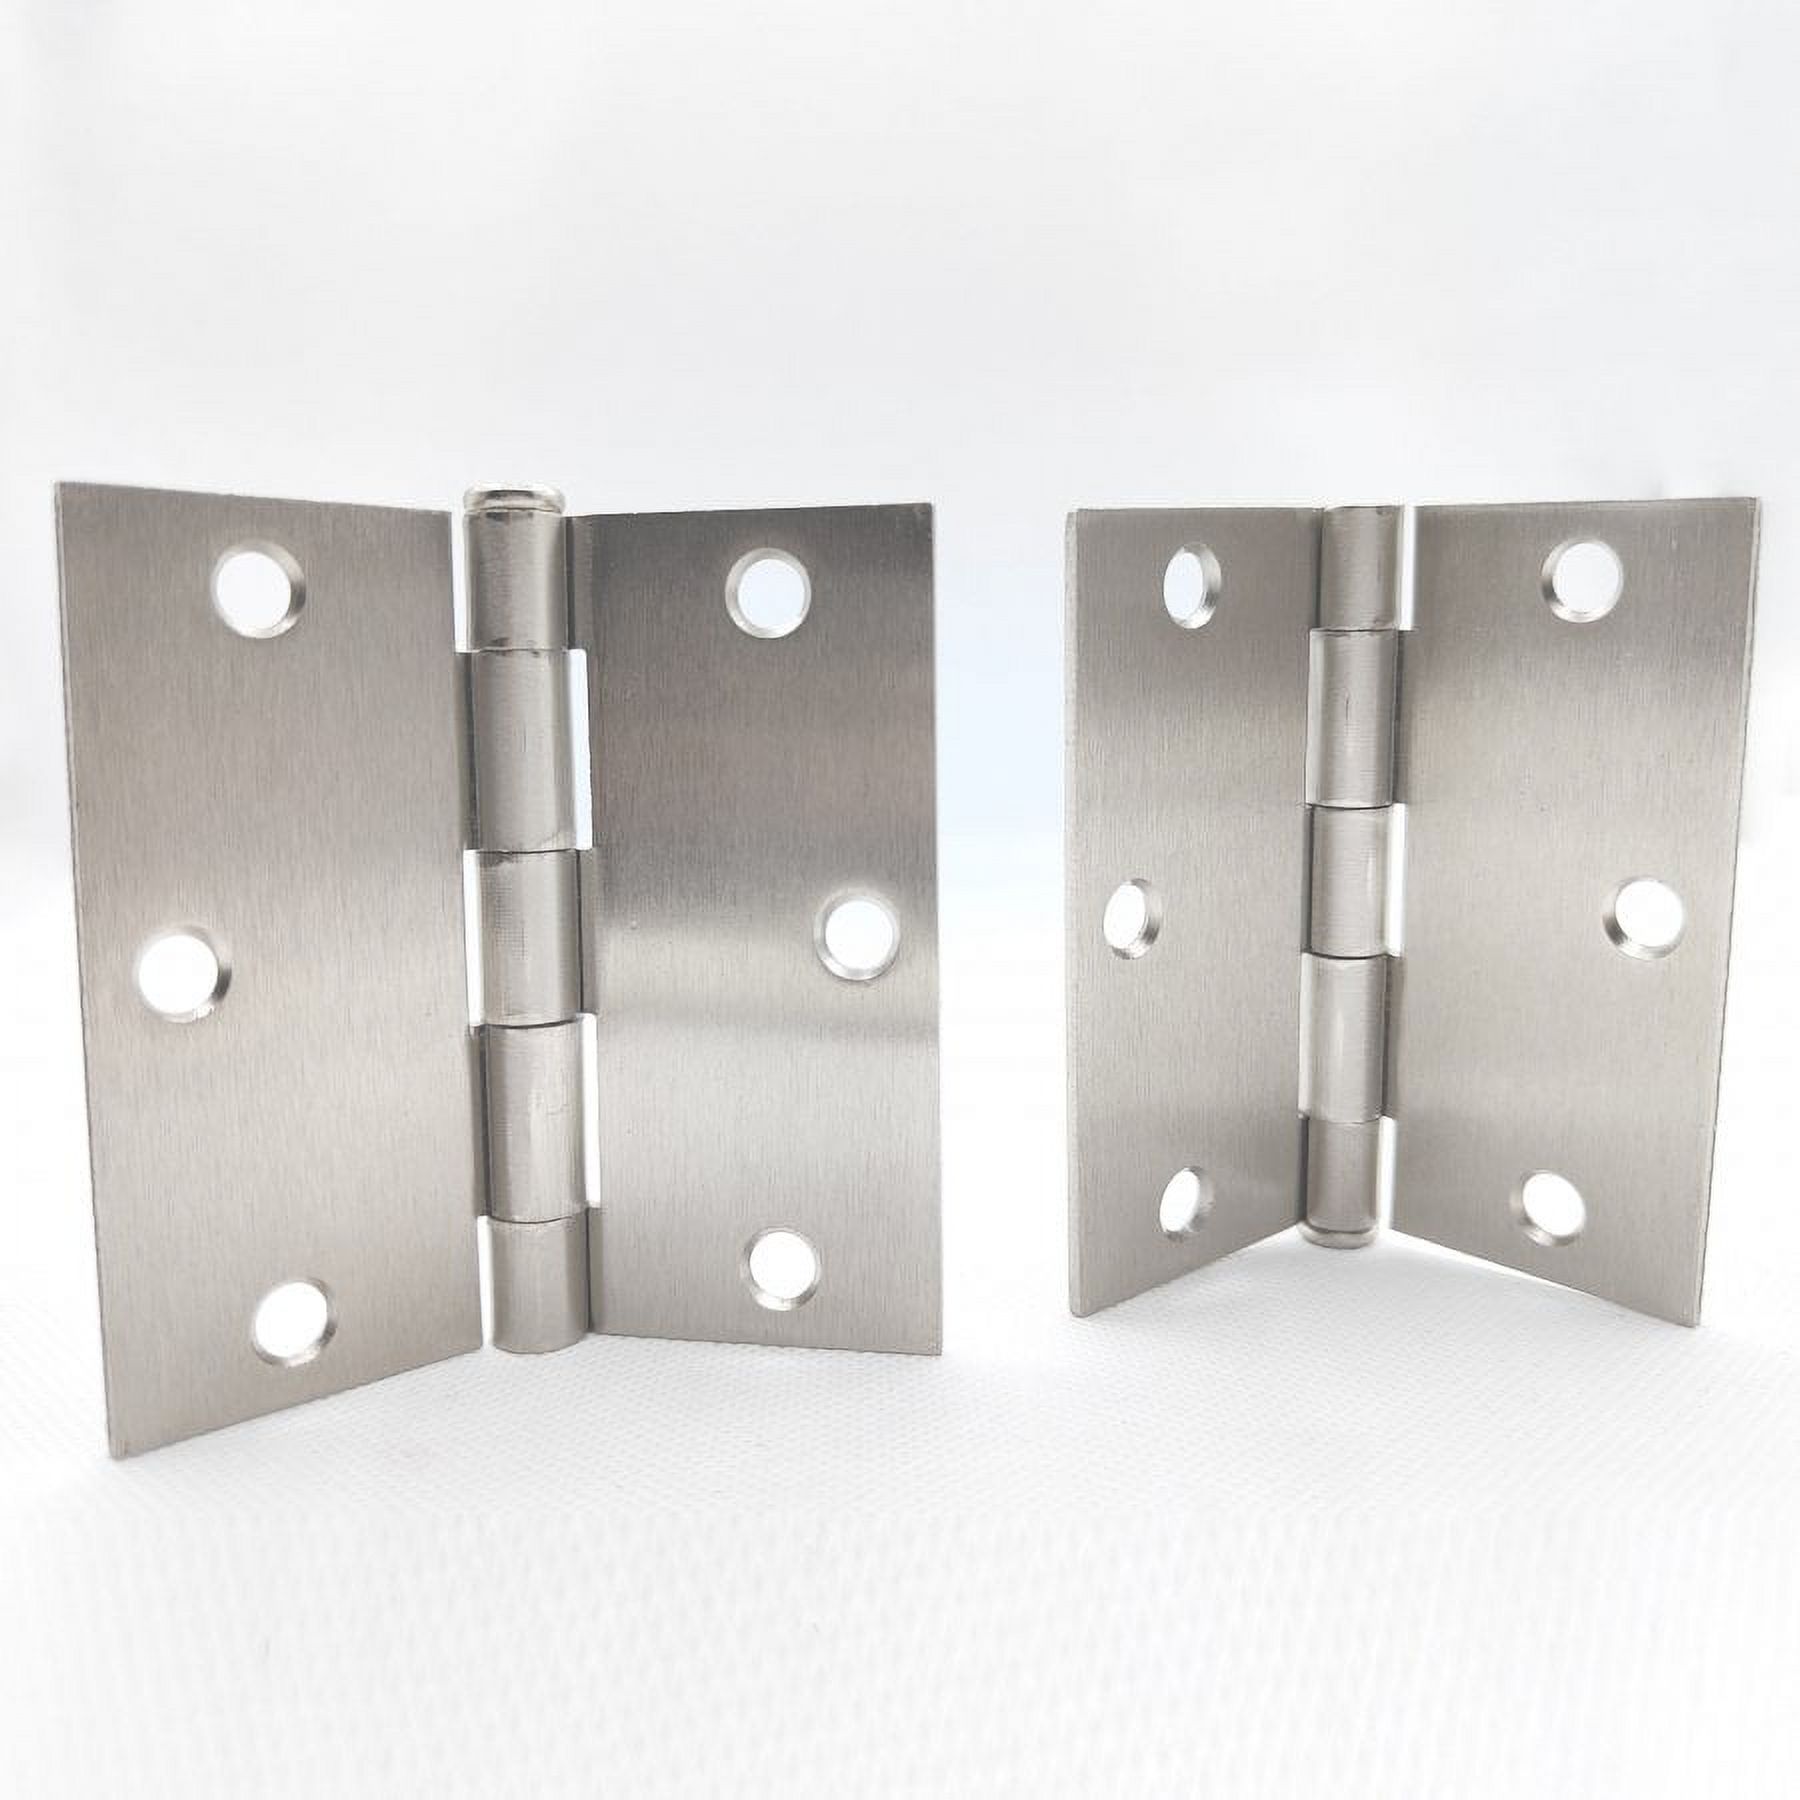 50pair(100pcs)Steel door hinge 3-1/2"Square corner,satin nickel,removable pin, door hinge,mobile home door hinge  and cabinet hinge,with screws - image 3 of 6